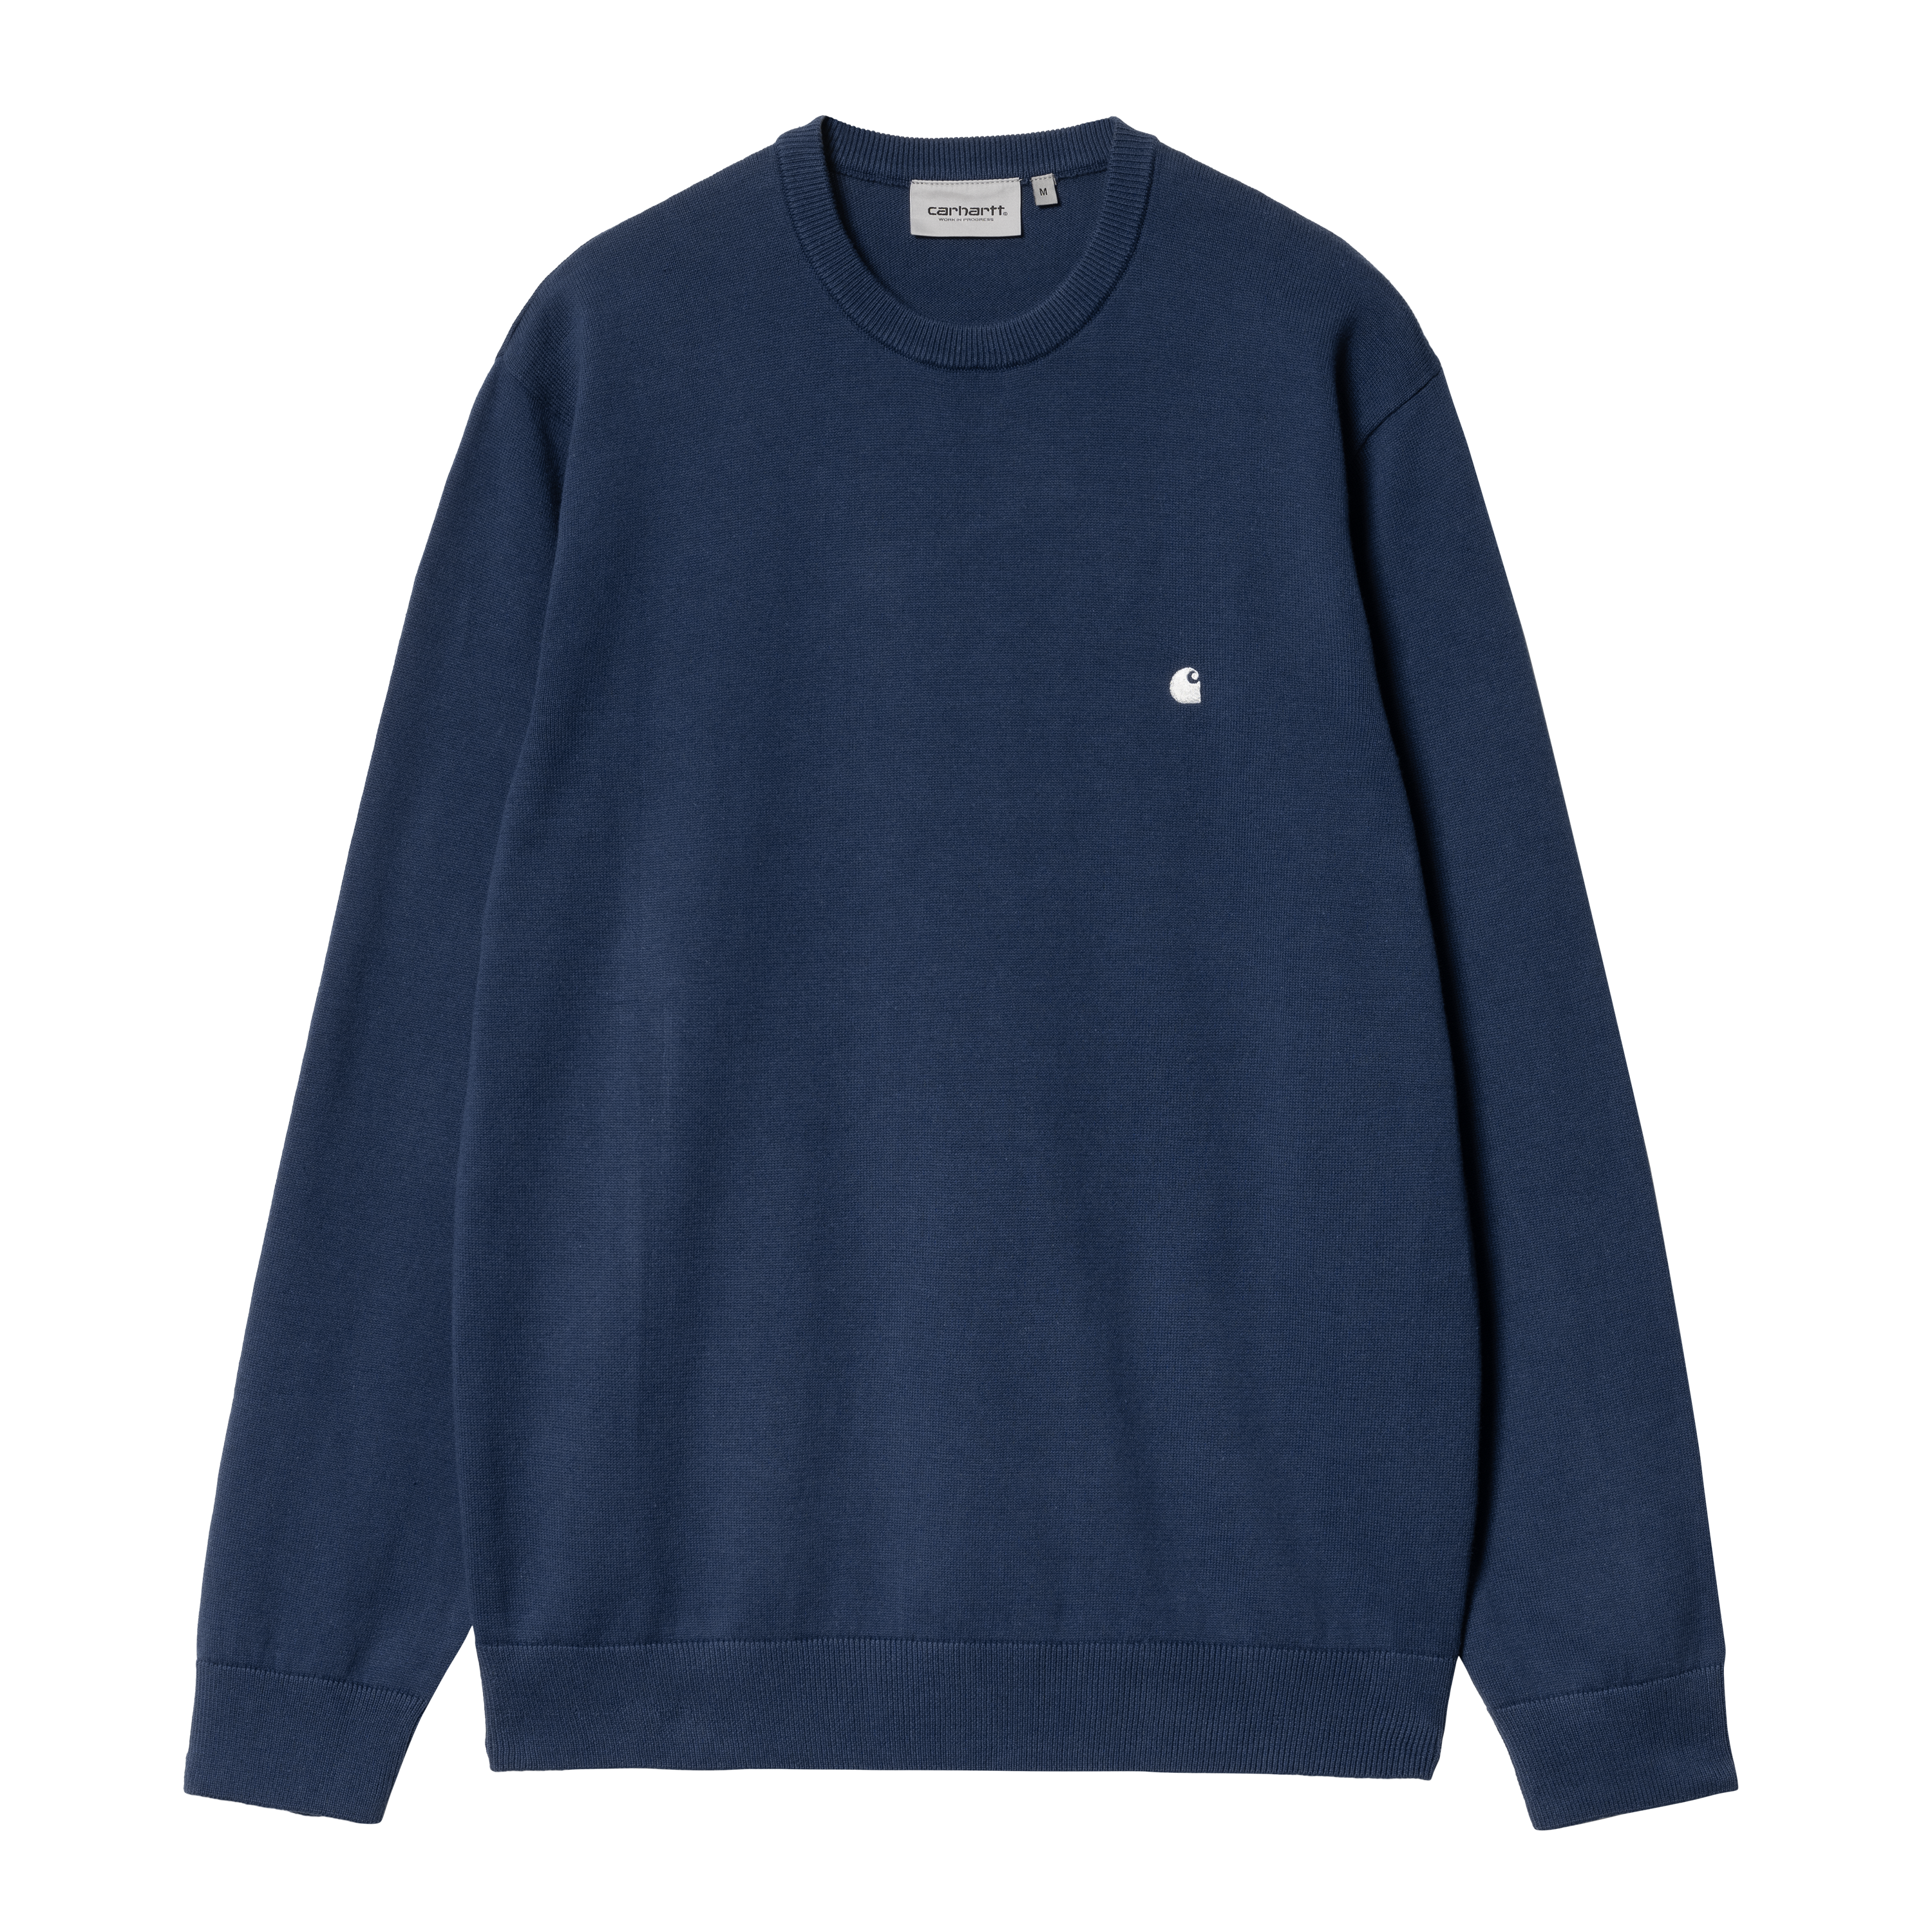 Carhartt WIP Madison Sweater in Blue